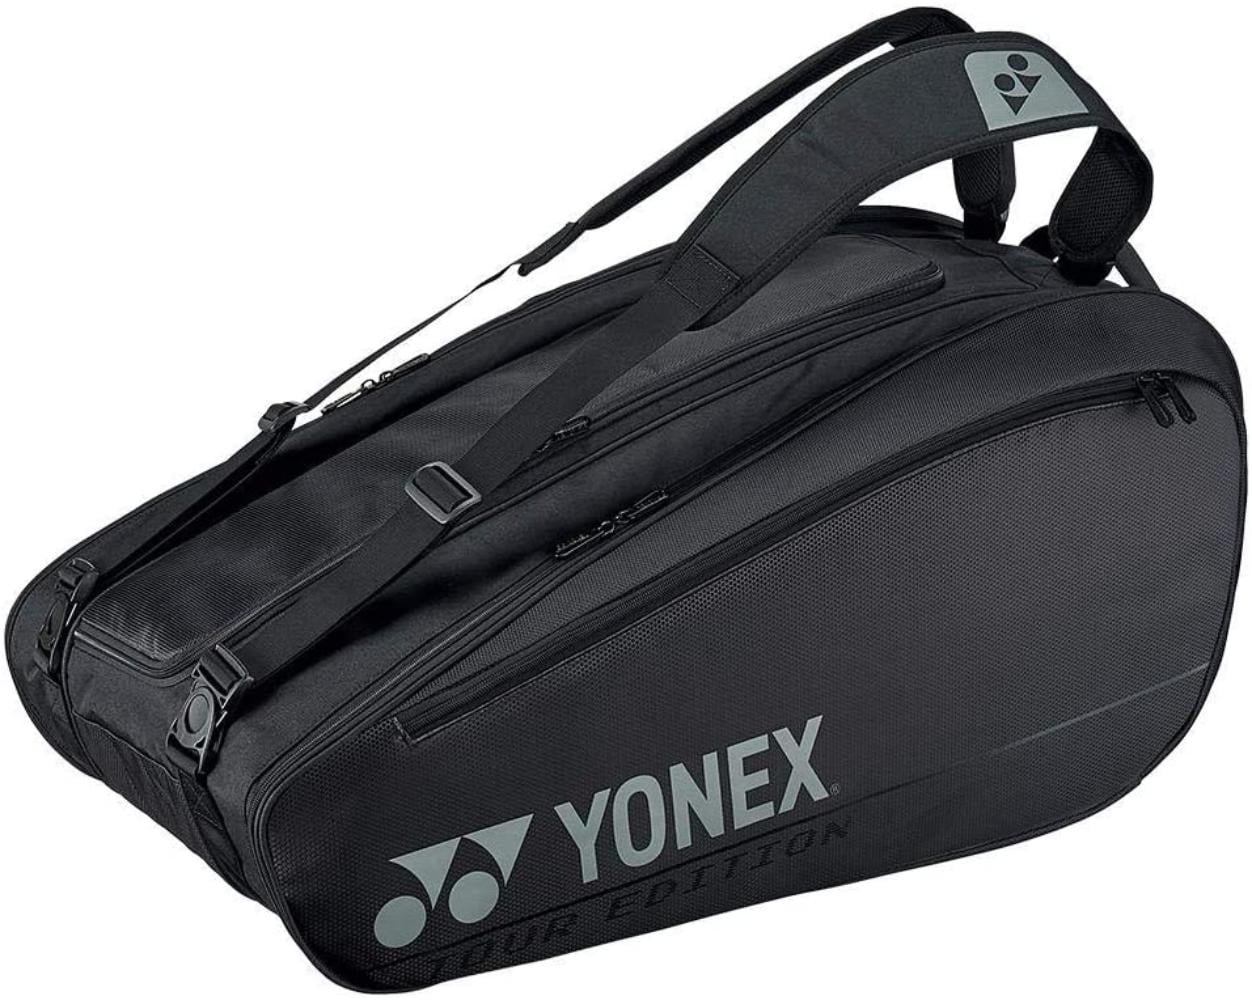 Badminton Racquet Pro Thermal Bag BA92029EX BLACK 2020 New YONEX 9 Tennis/12 